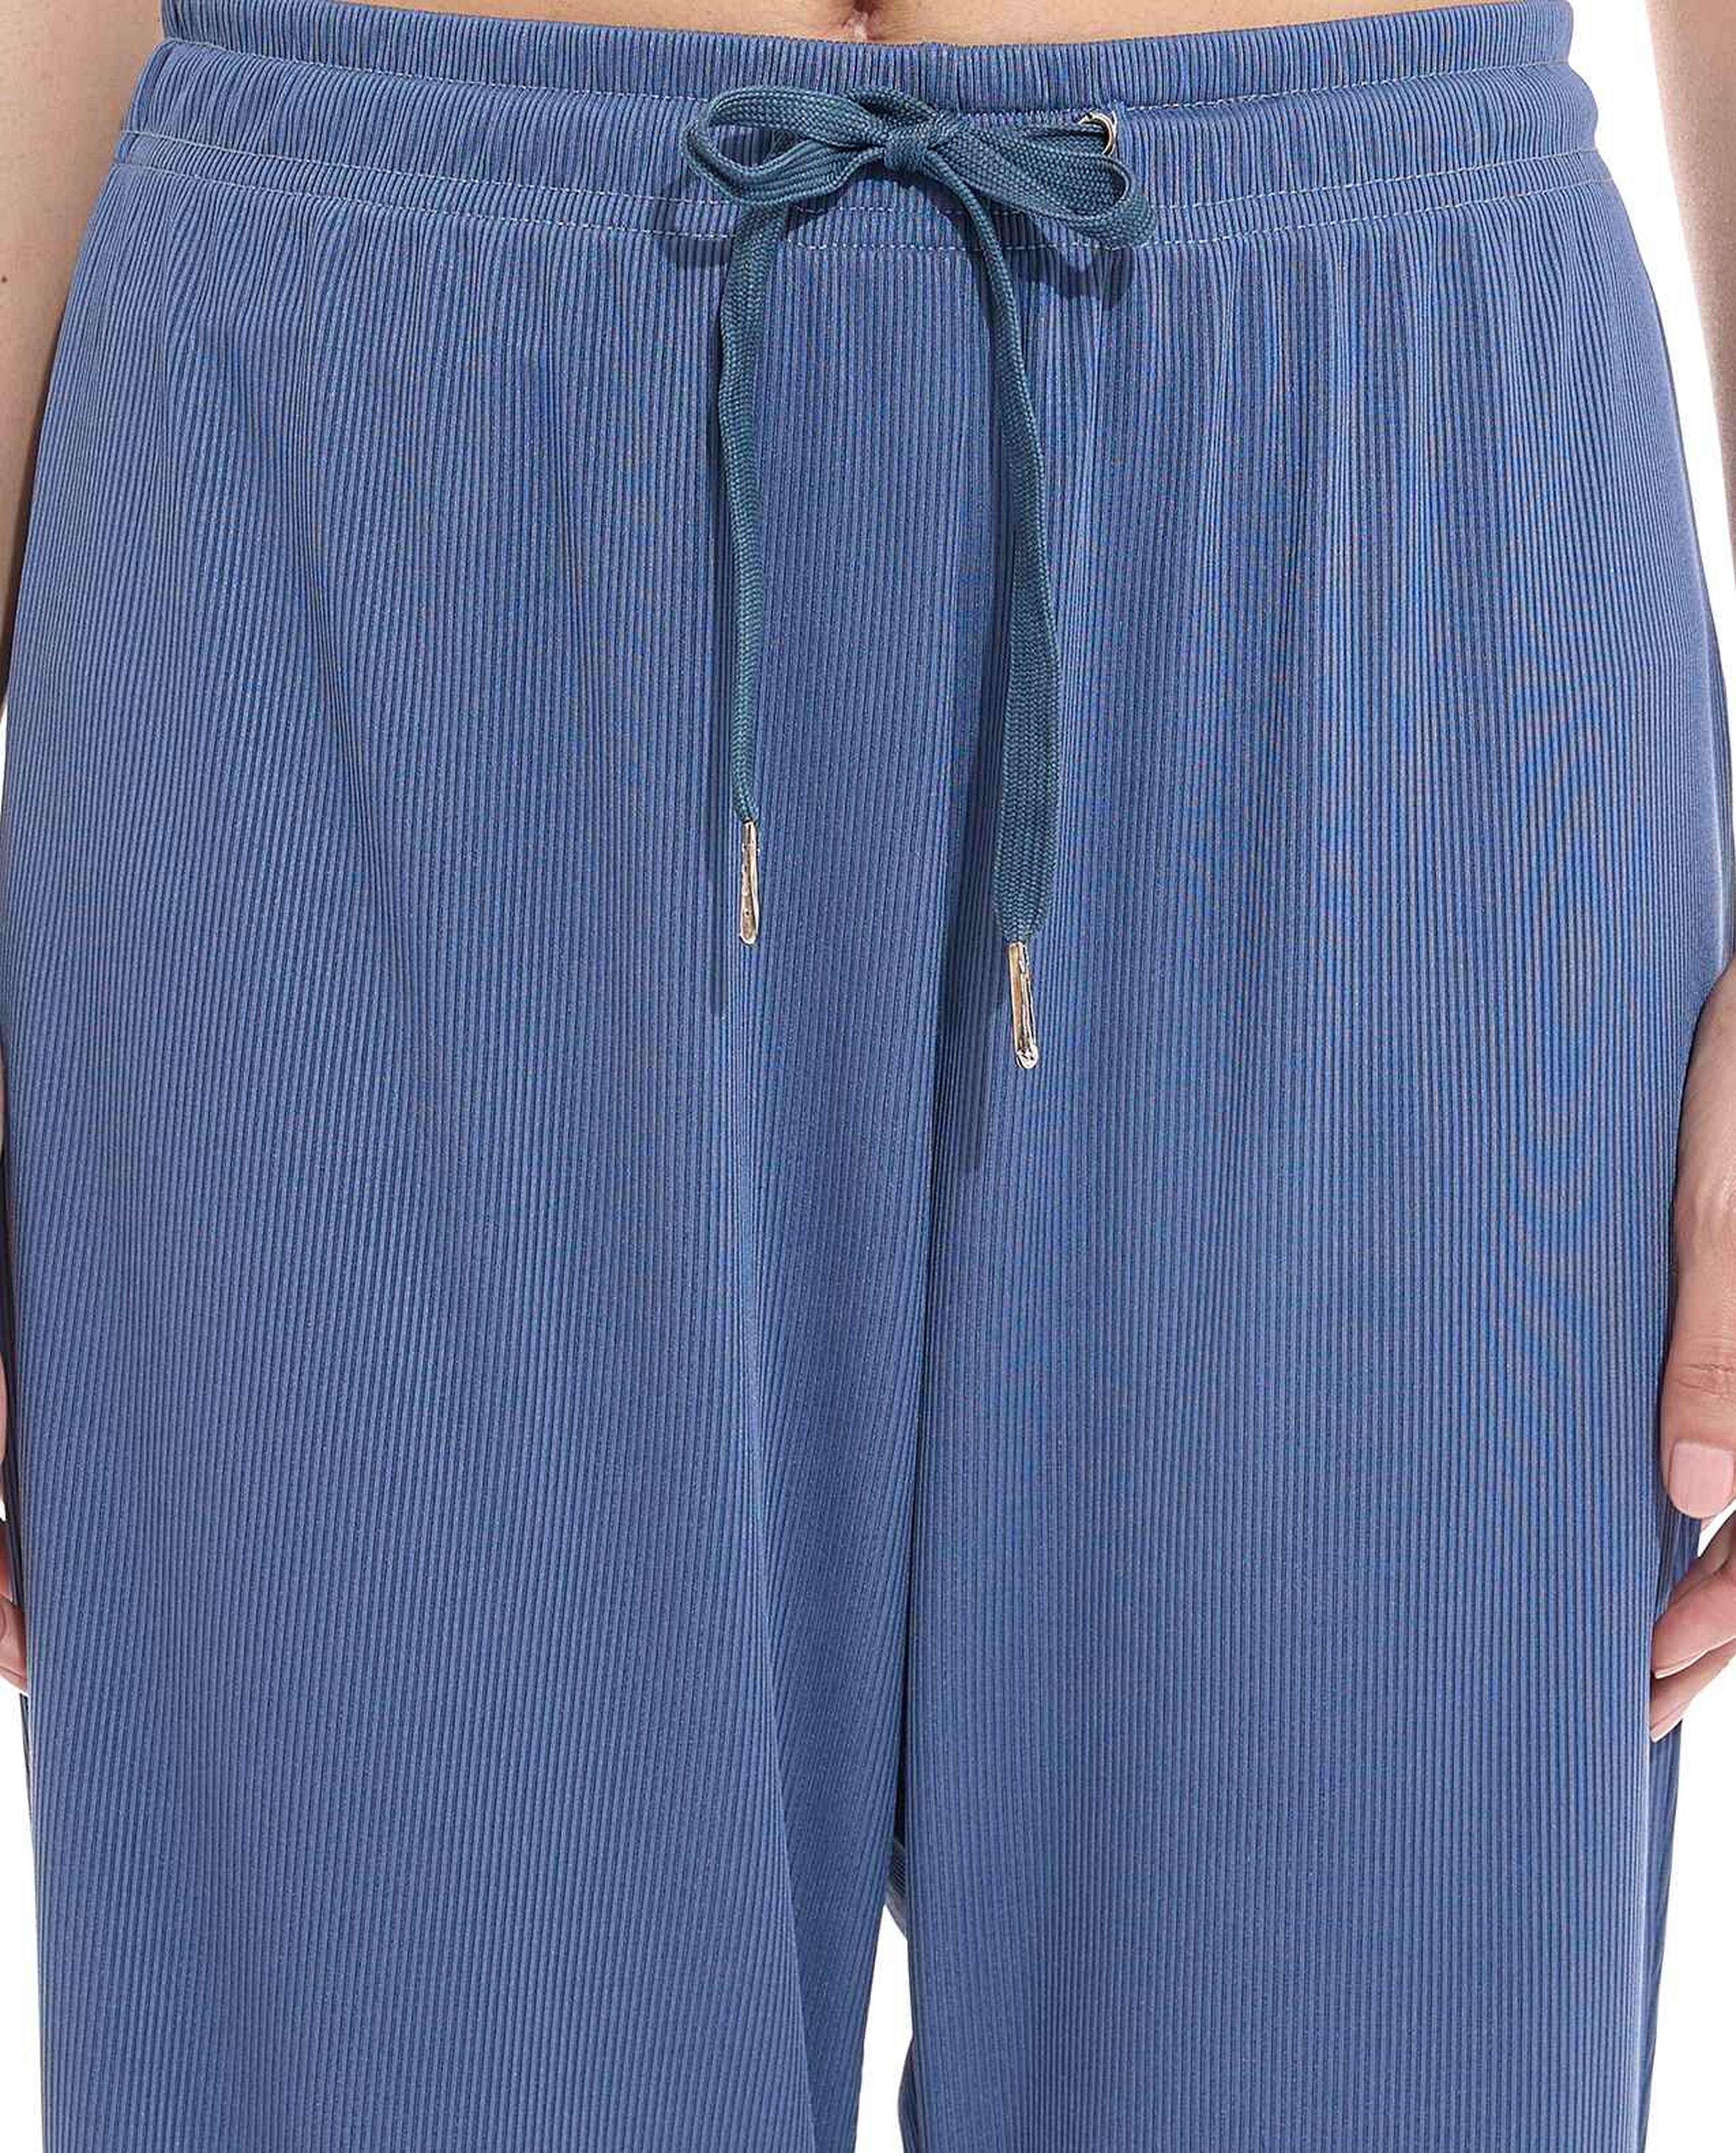 Ribbed Pajama Pants with Drawstring Waist